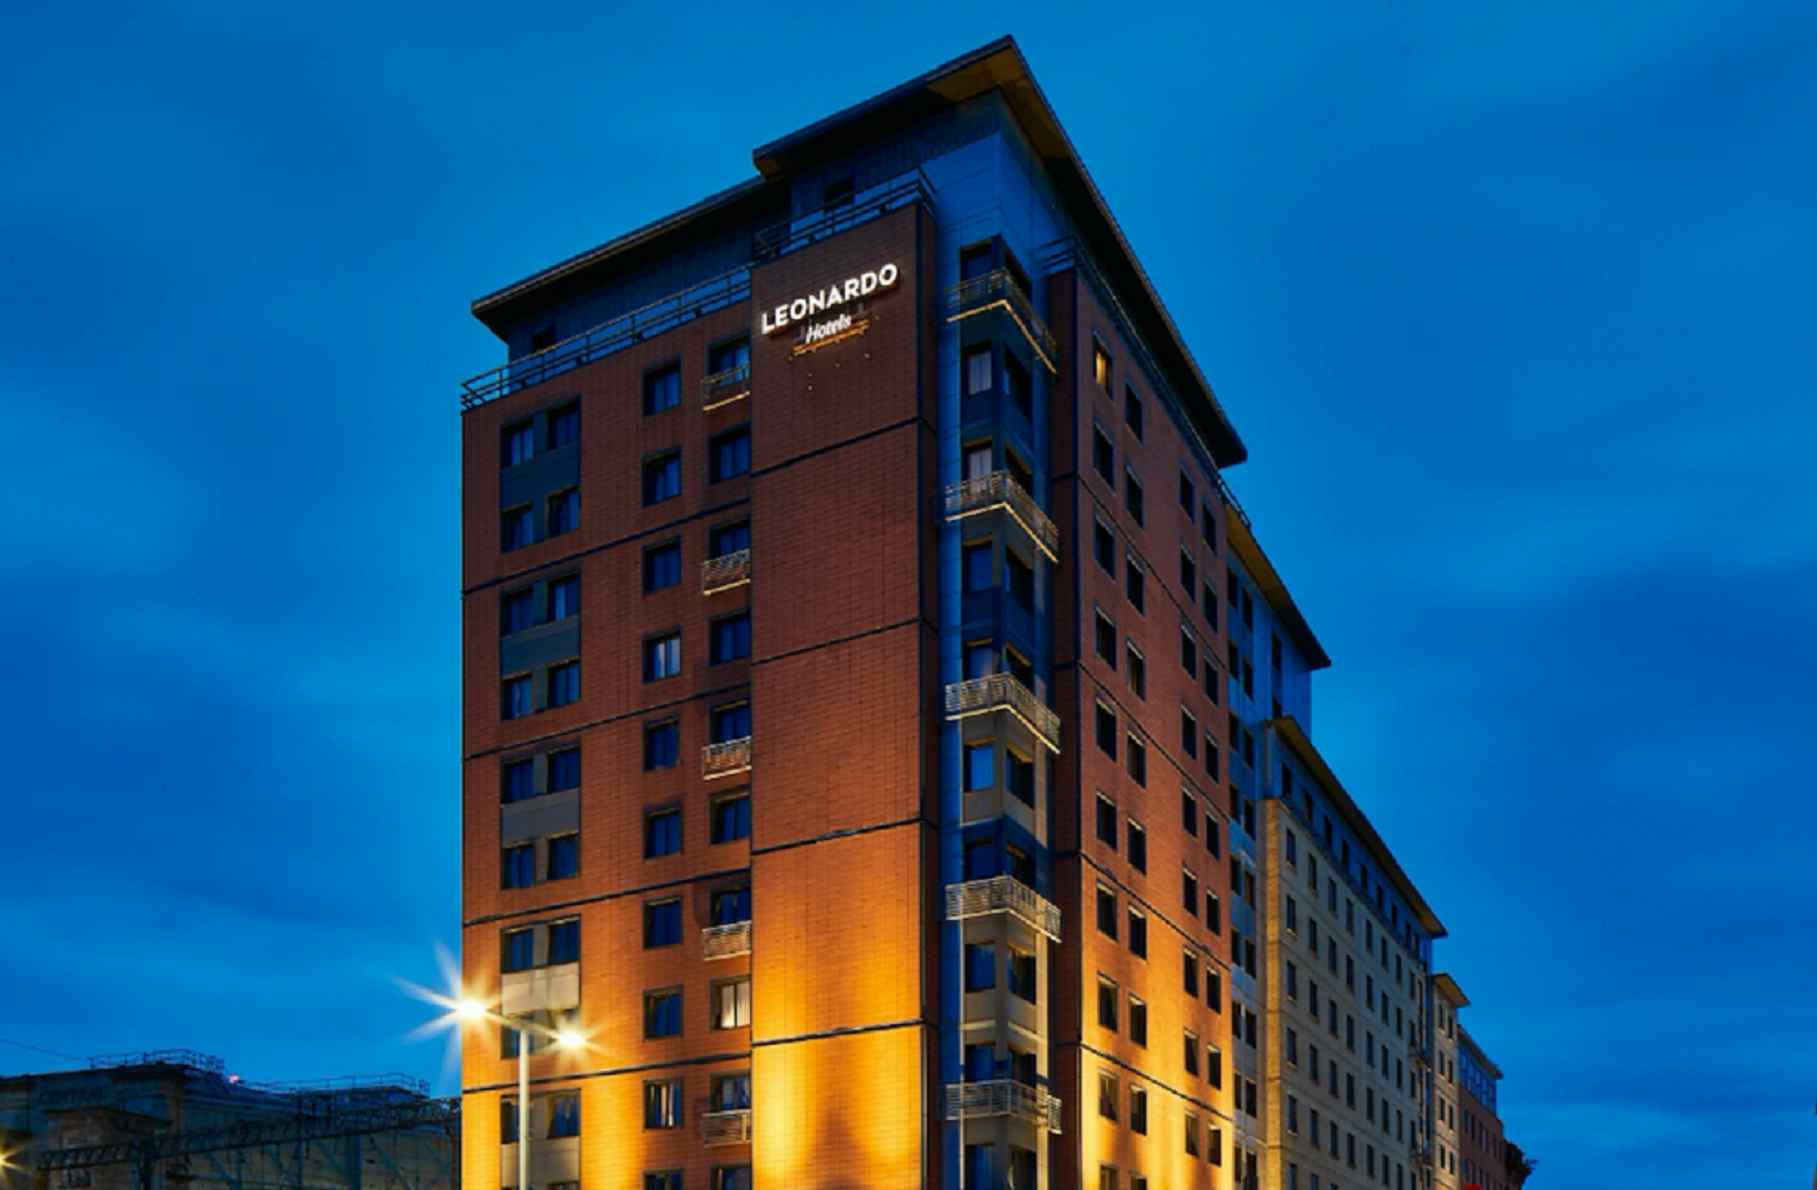 109, Leonardo Hotel Glasgow - Formerly Jurys Inn